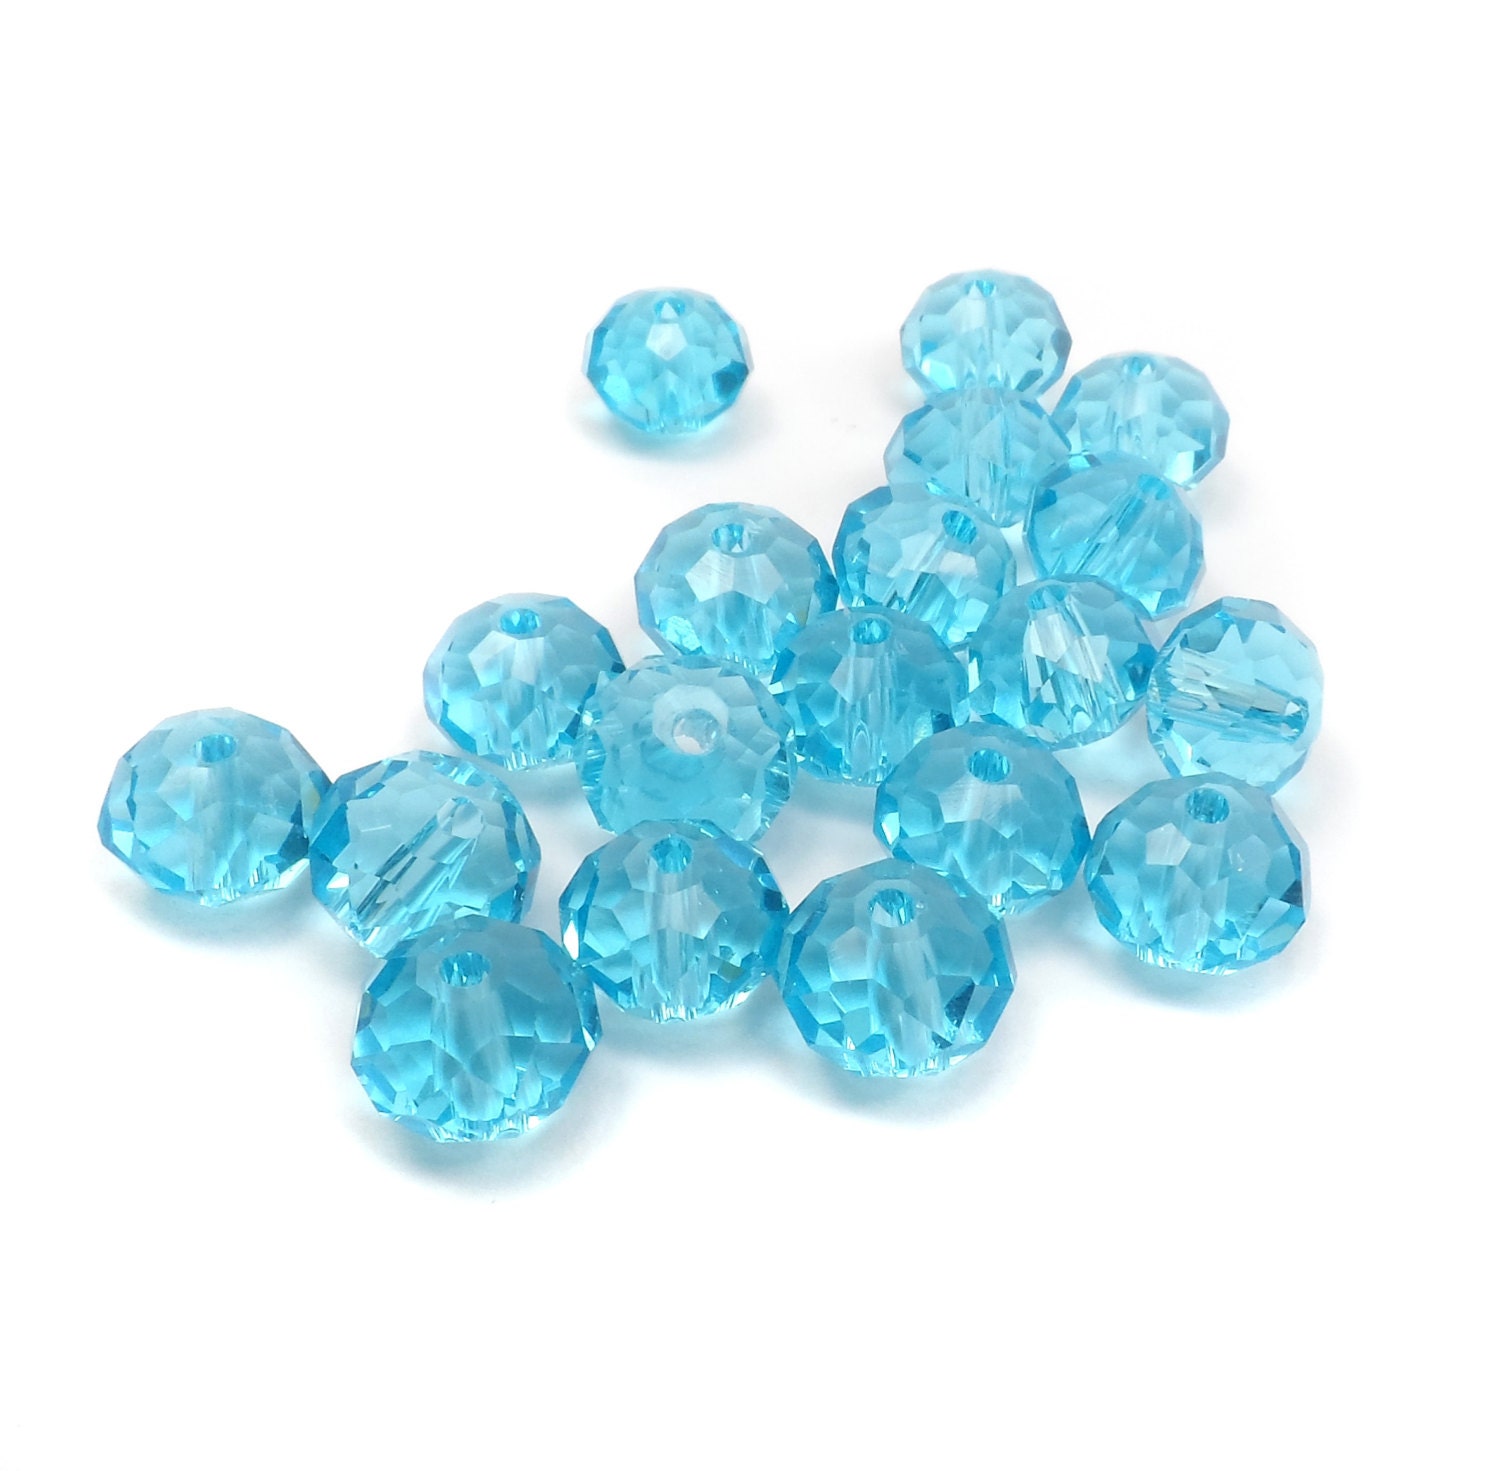 20 Blue Aqua Rondelle Crystal Beads, Faceted Glass Beads, 8 mm B71 - ABSBeadSupplies